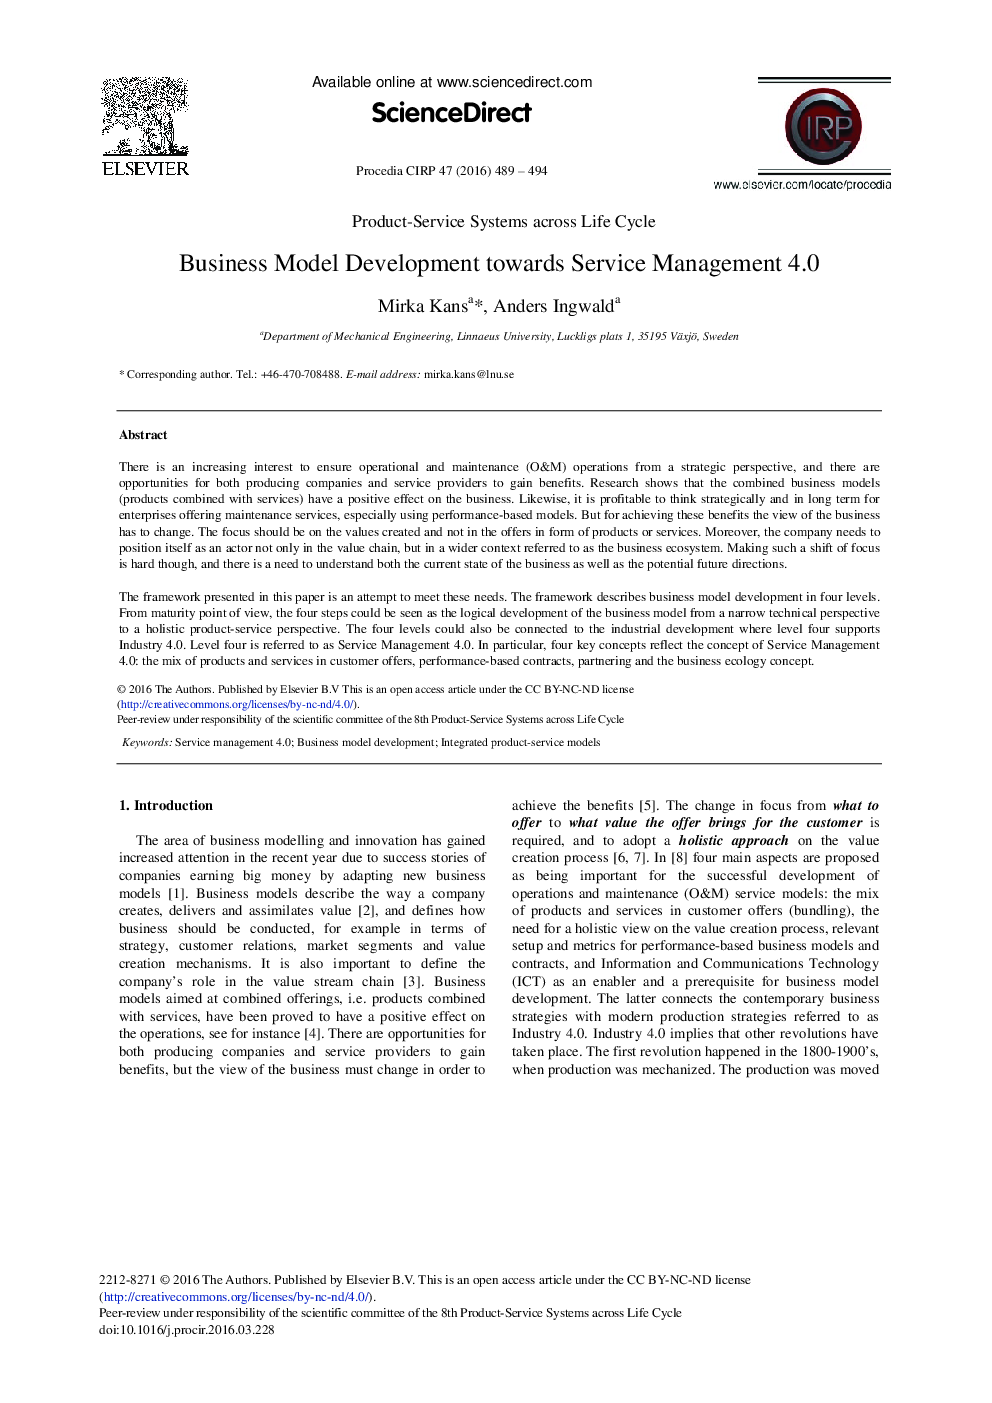 Business Model Development Towards Service Management 4.0 